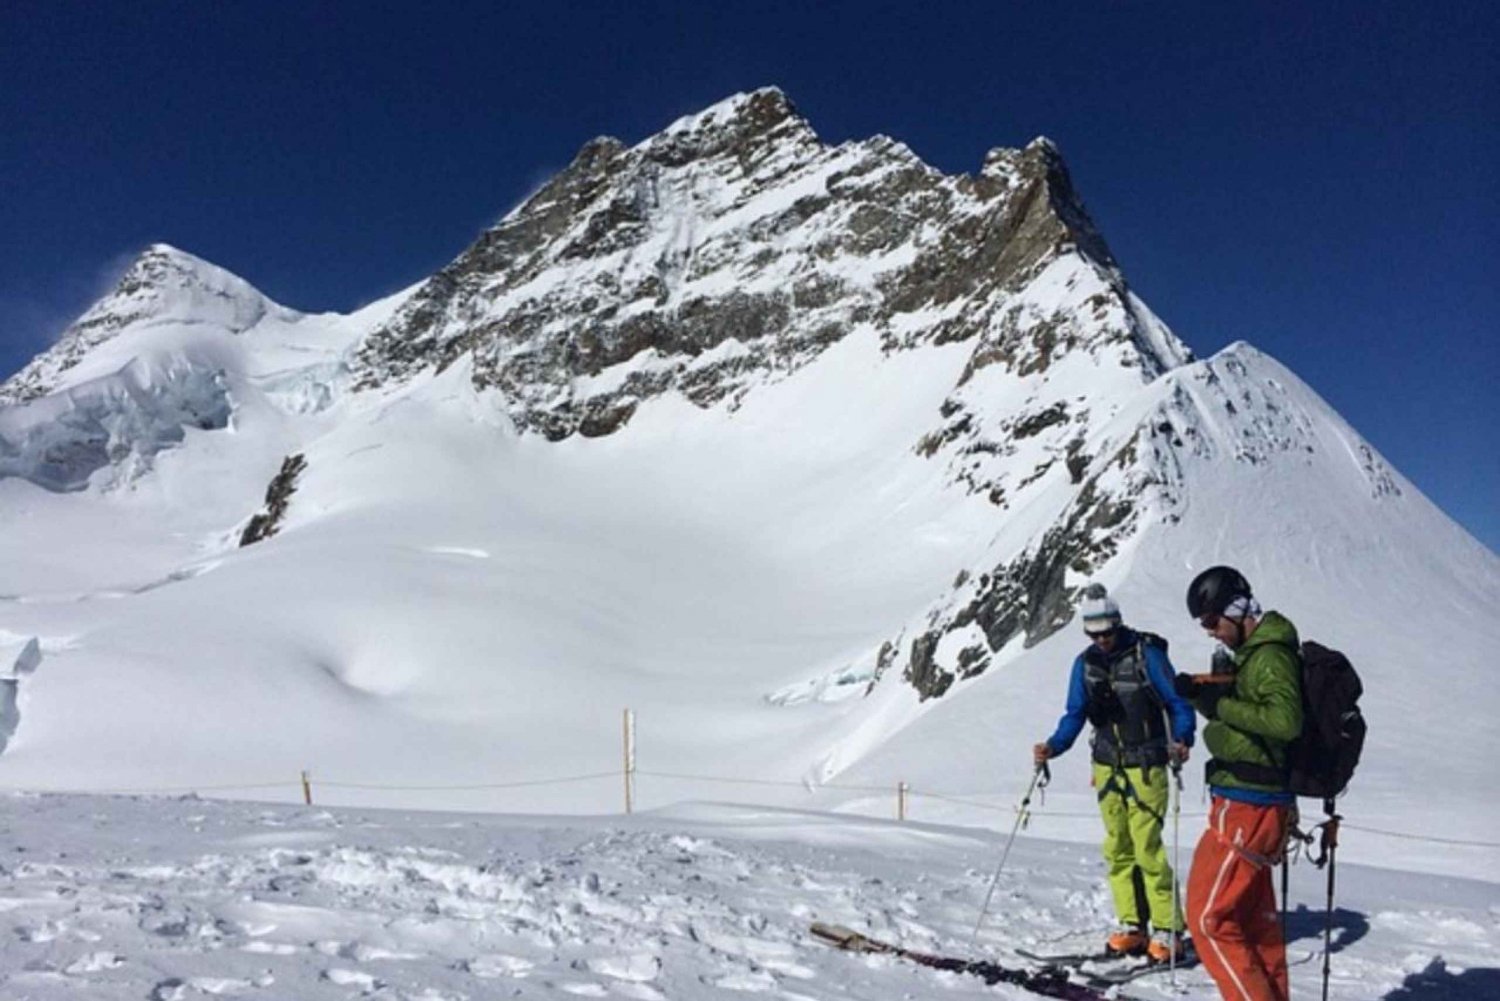 Val Thorens: Private Ski Safari with transport